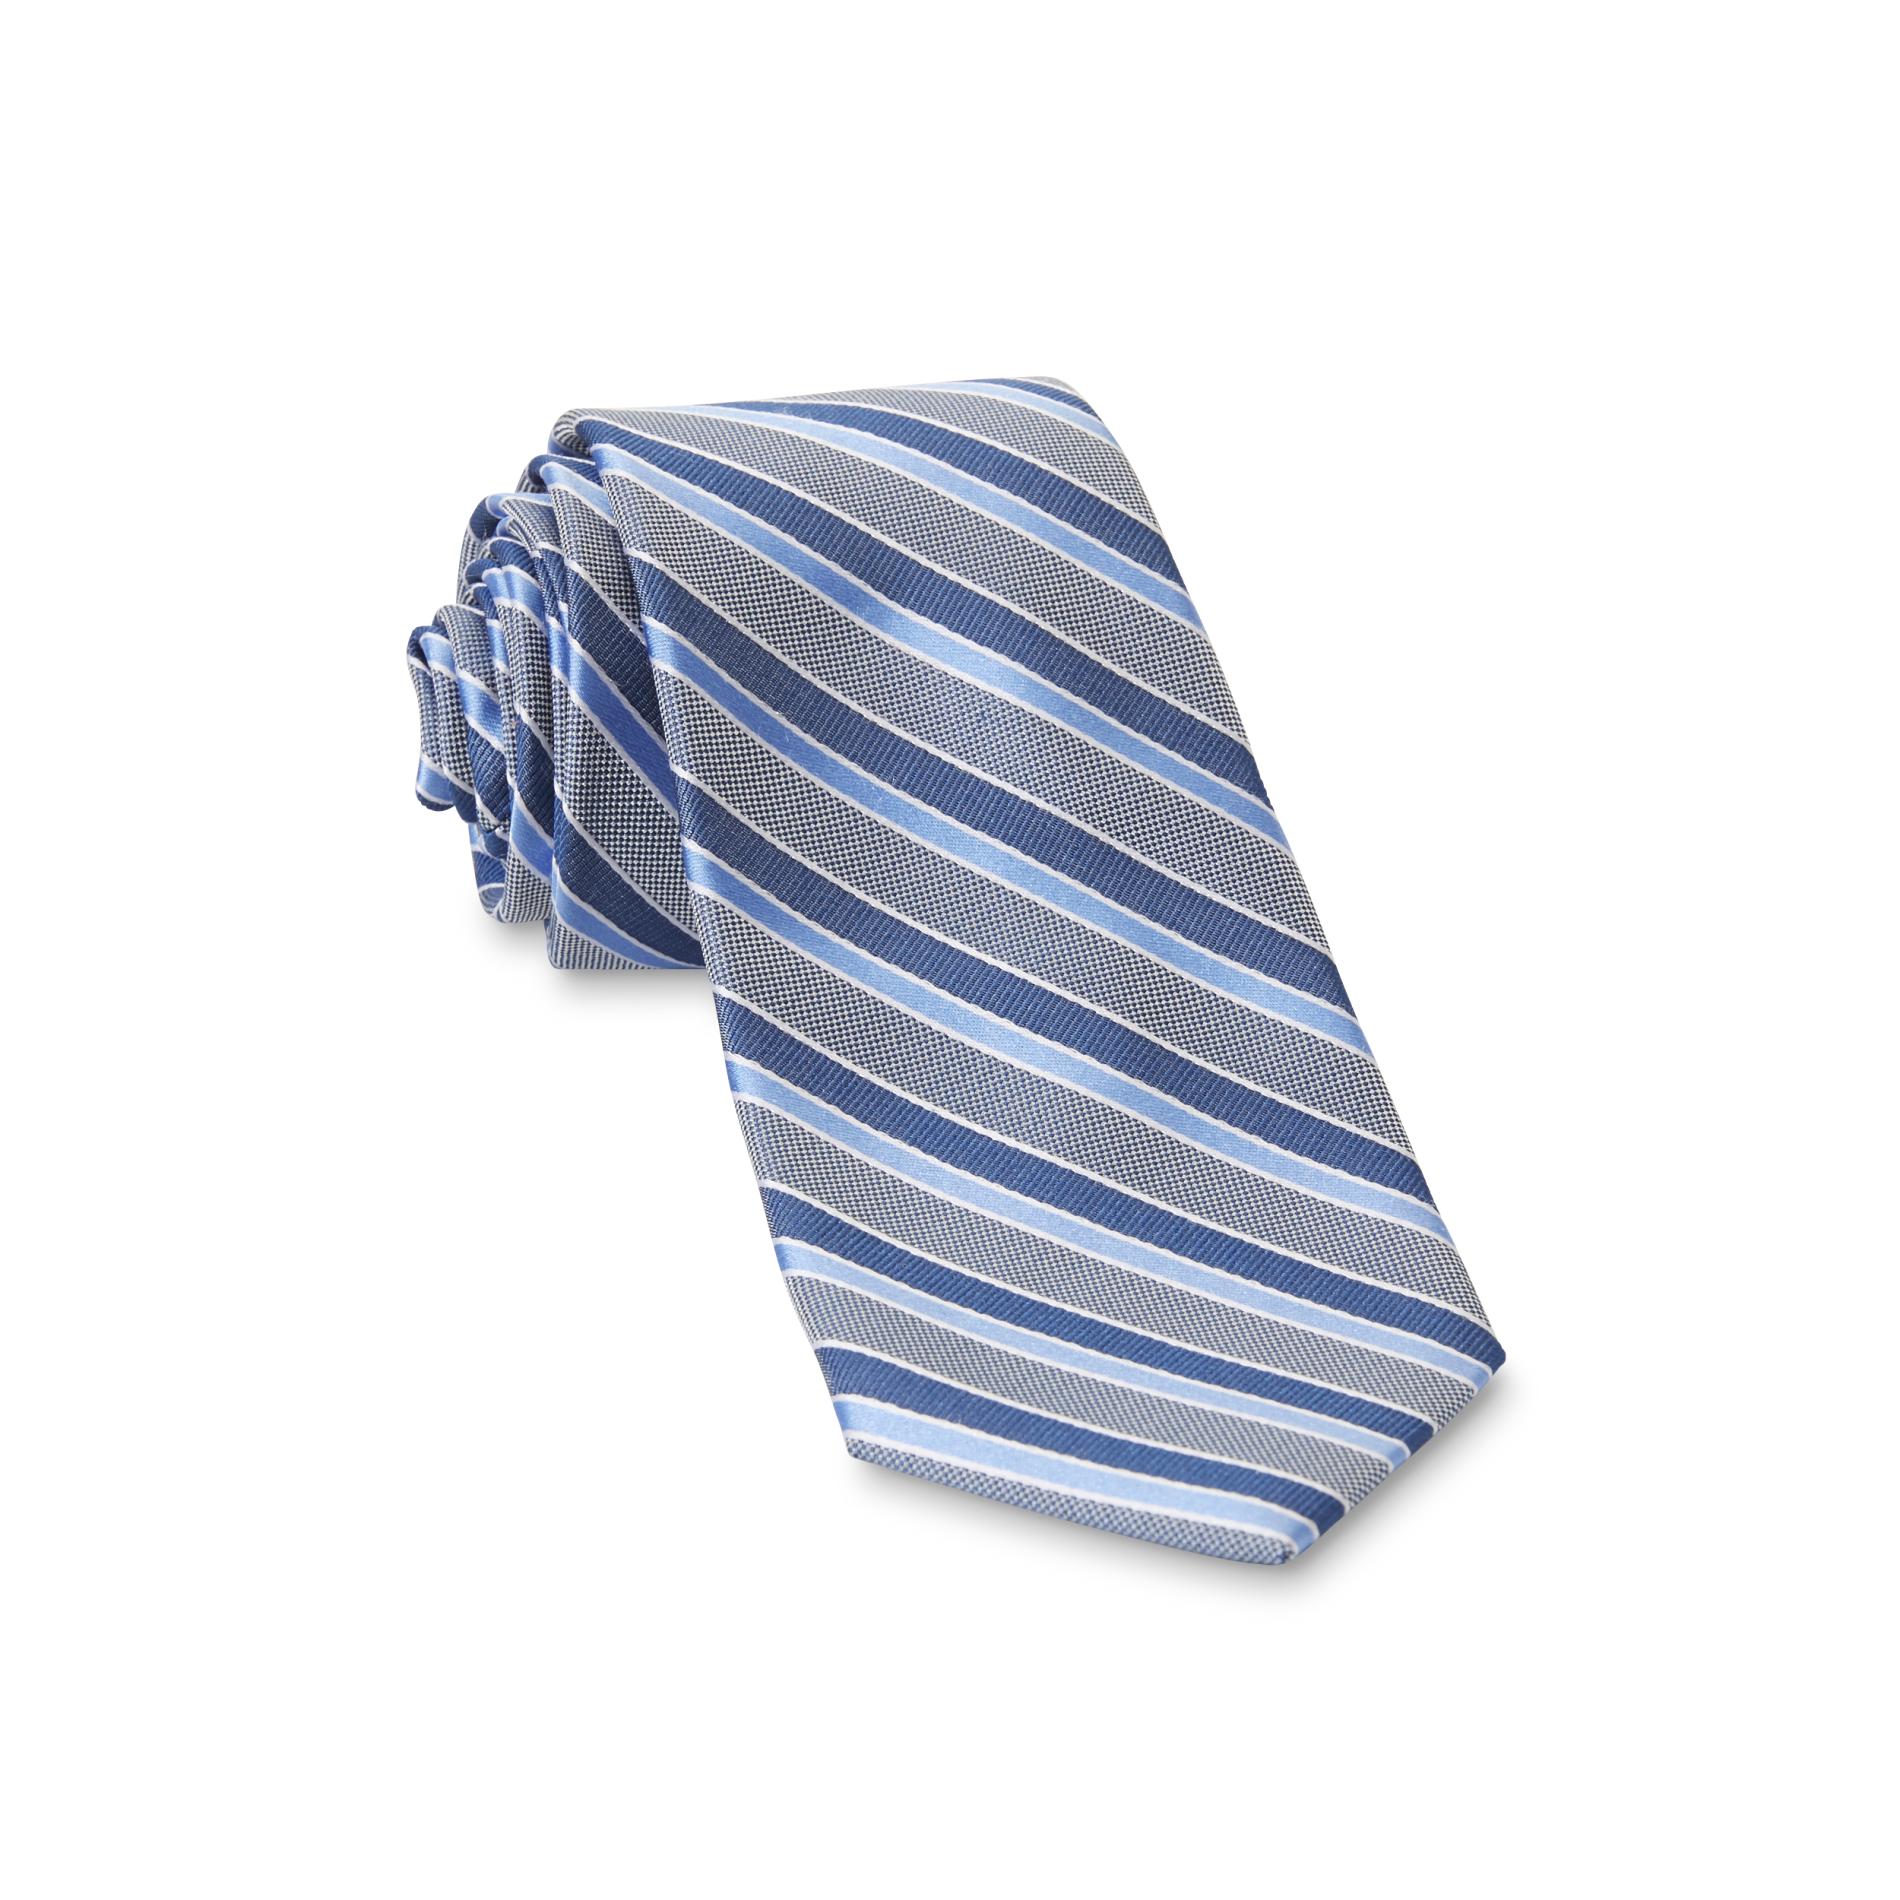 Dockers Men's Slim Necktie - Striped